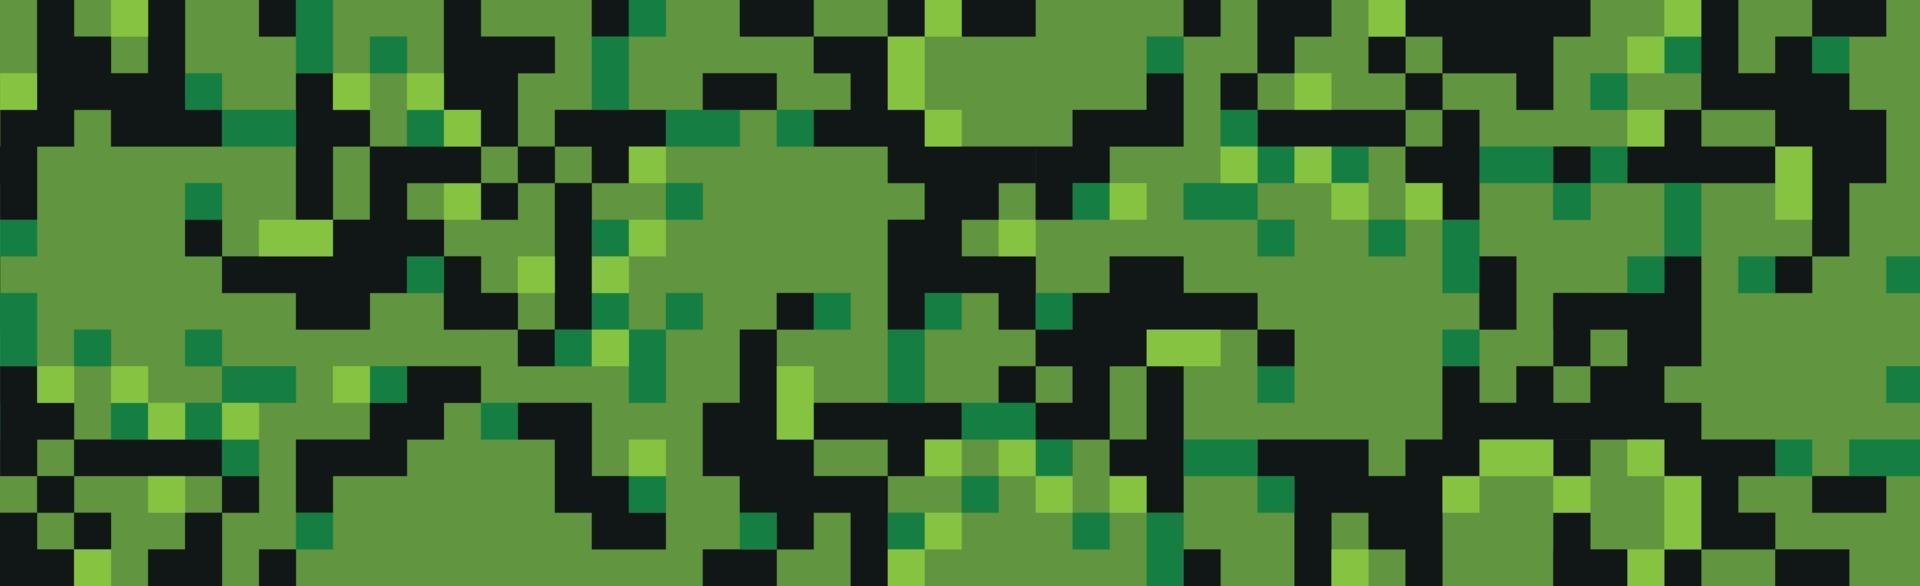 Military or hunting panoramic khaki geometric seamless pattern - Vector